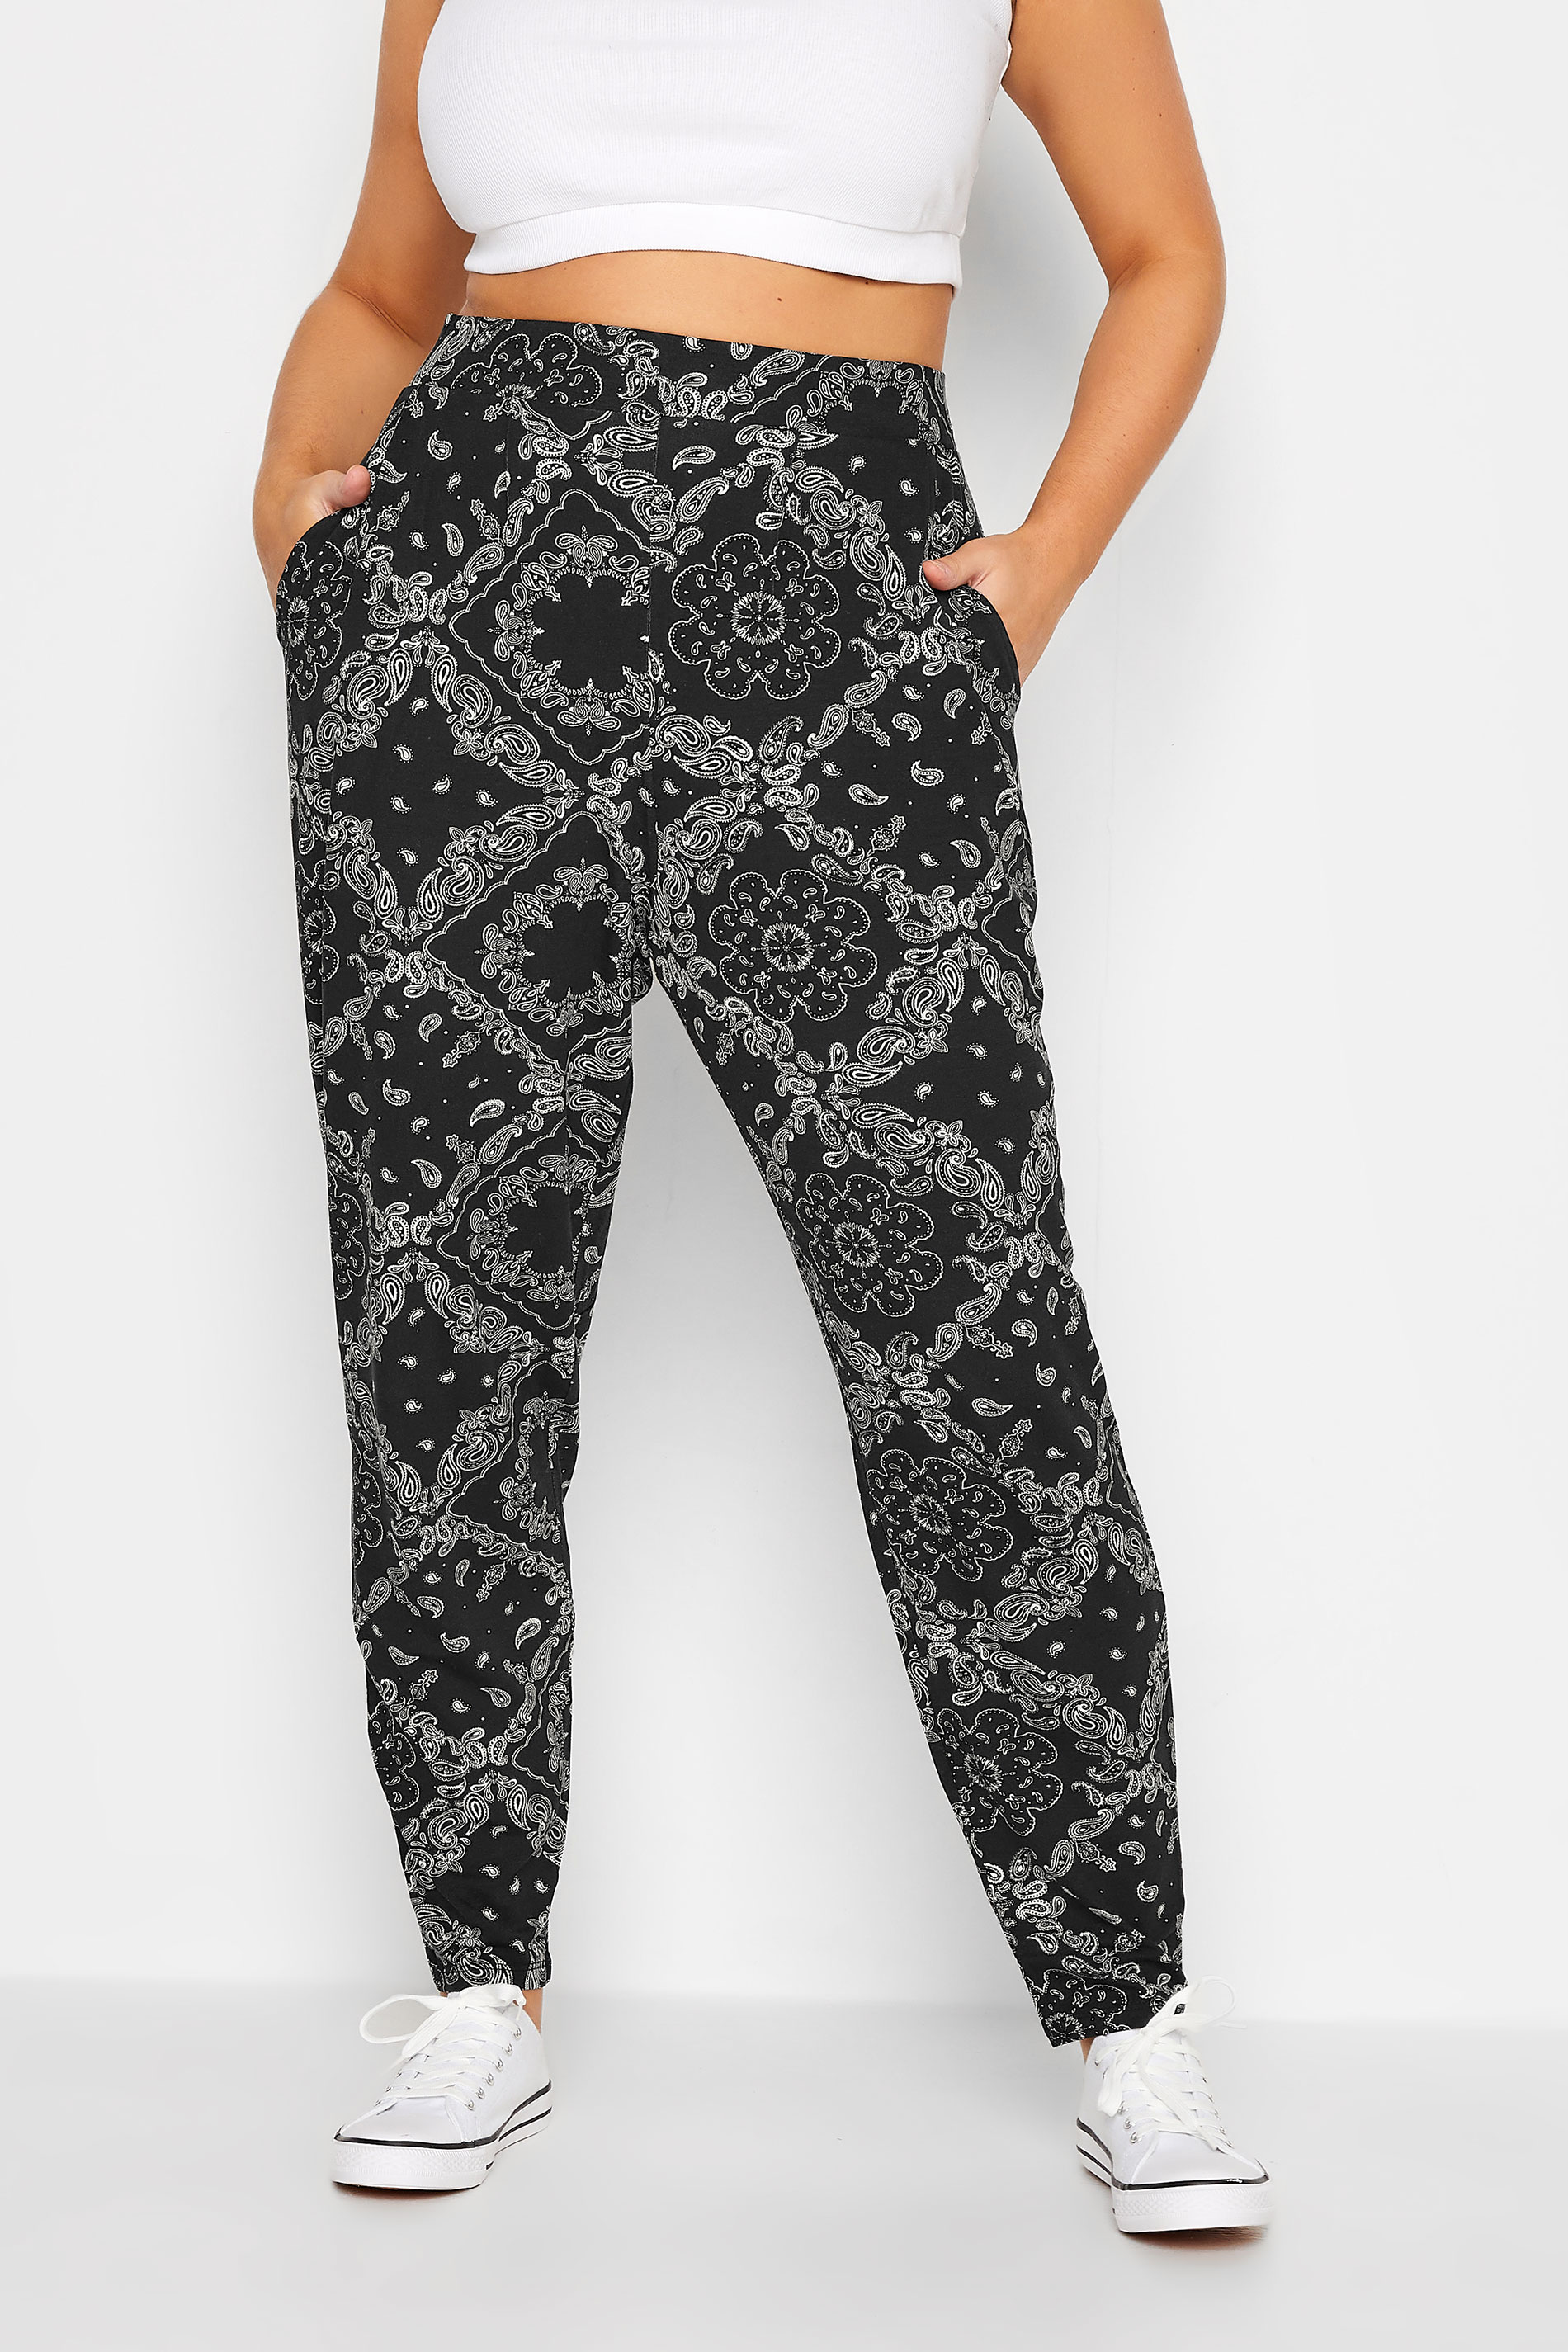 YOURS Plus Size Black Paisley Print Double Pleat Harem Trousers | Yours Clothing 1